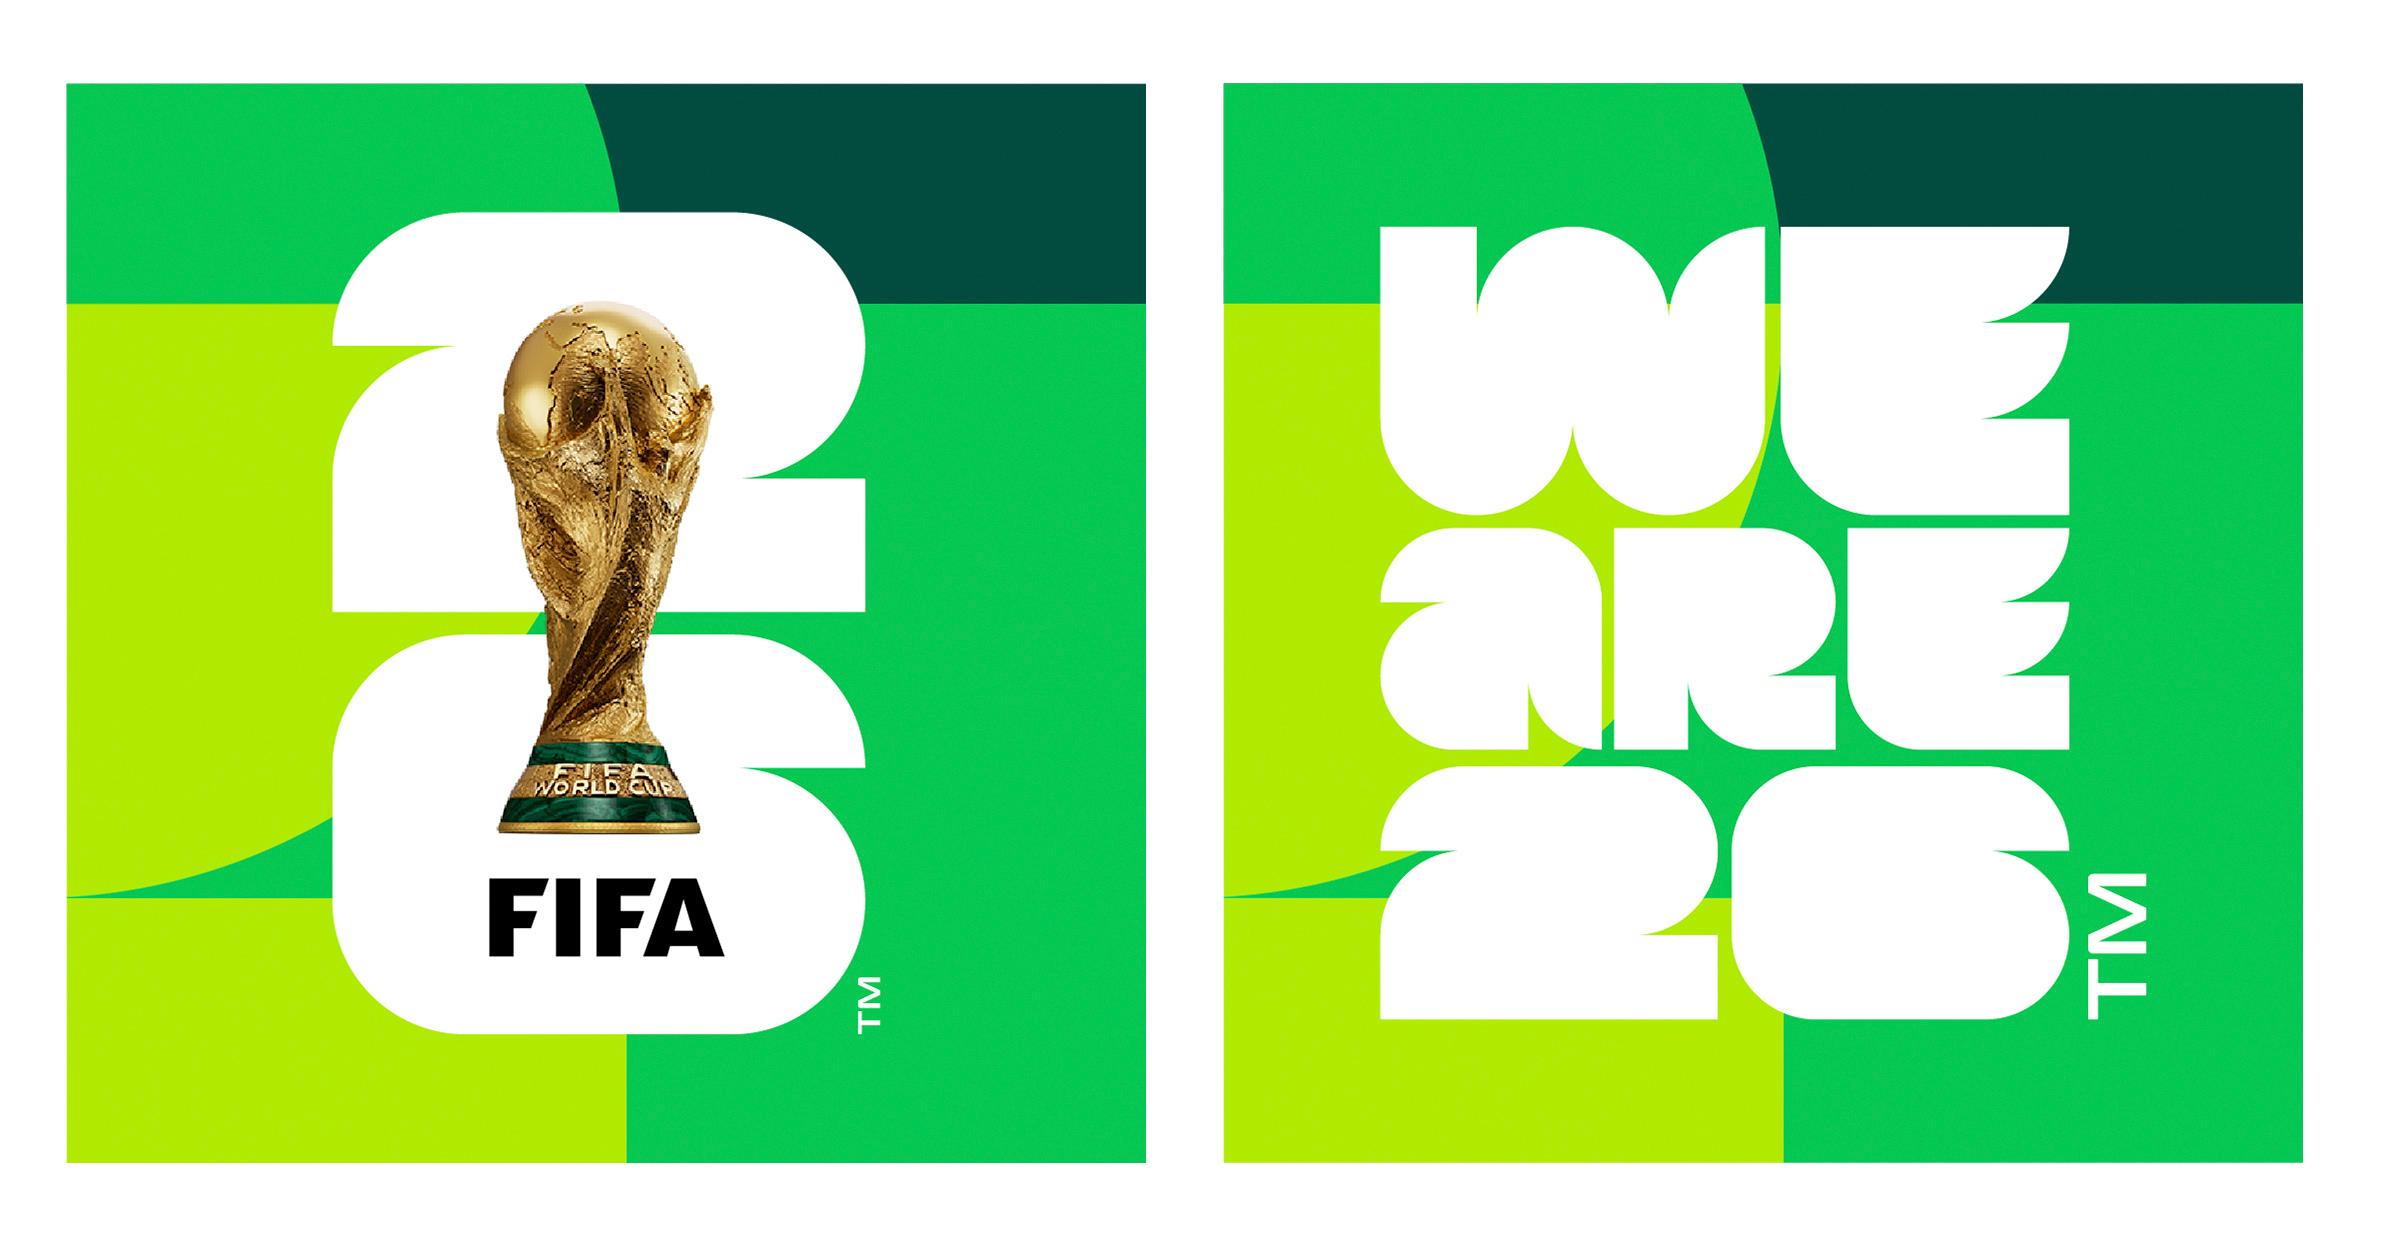 Logotipo da Copa do Mundo de 2026: seguro, porém incômodo